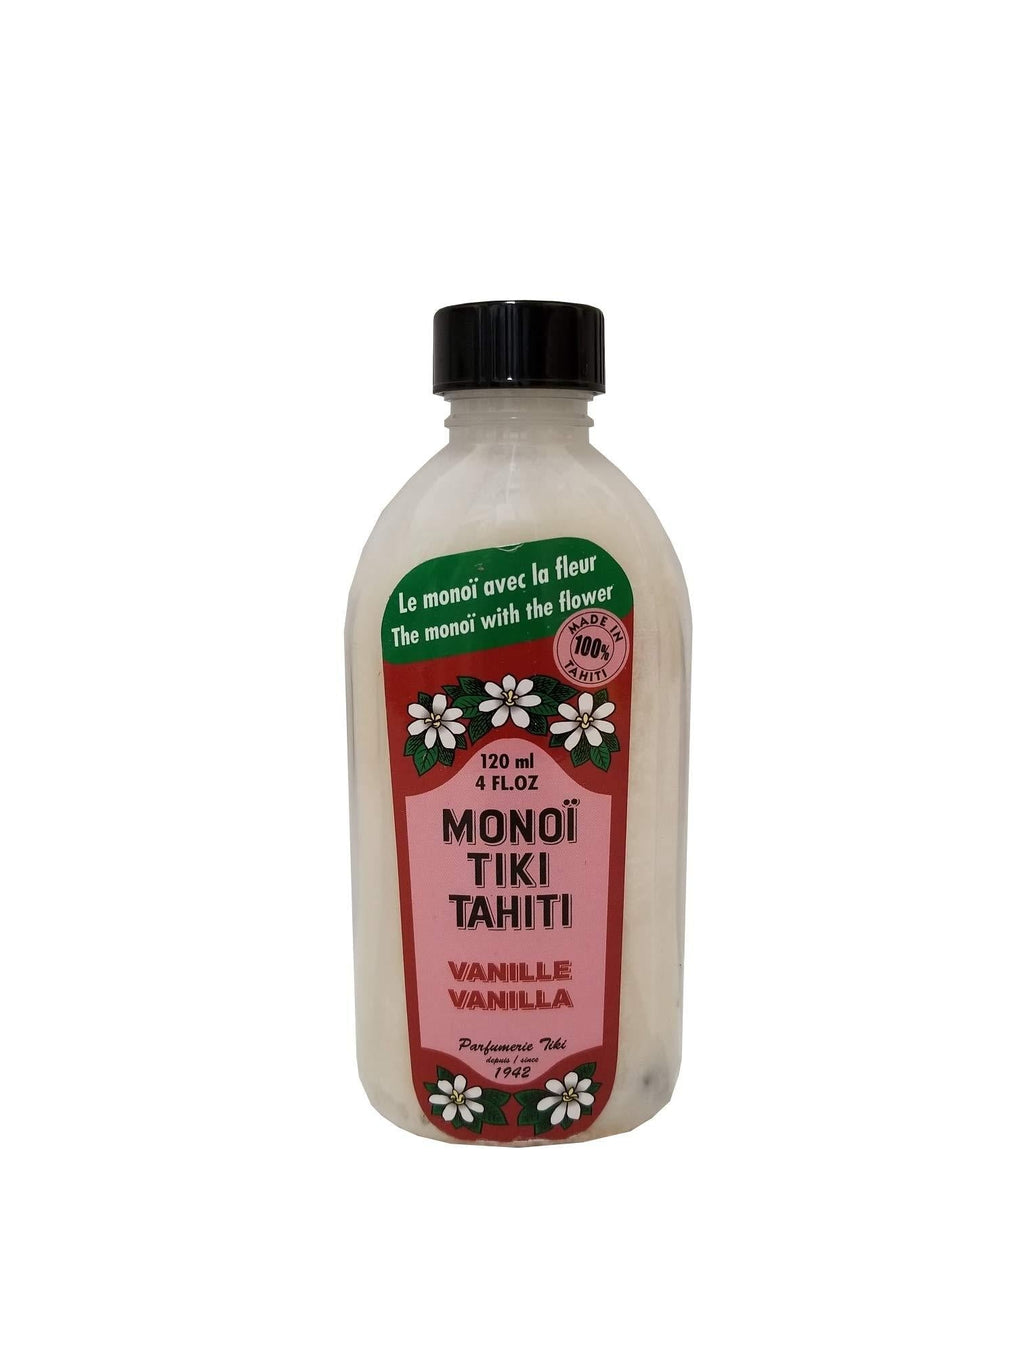 Monoi Tiare Tahiti Coconut Oil Vanilla - 4 Oz, Pack of 33 - BeesActive Australia